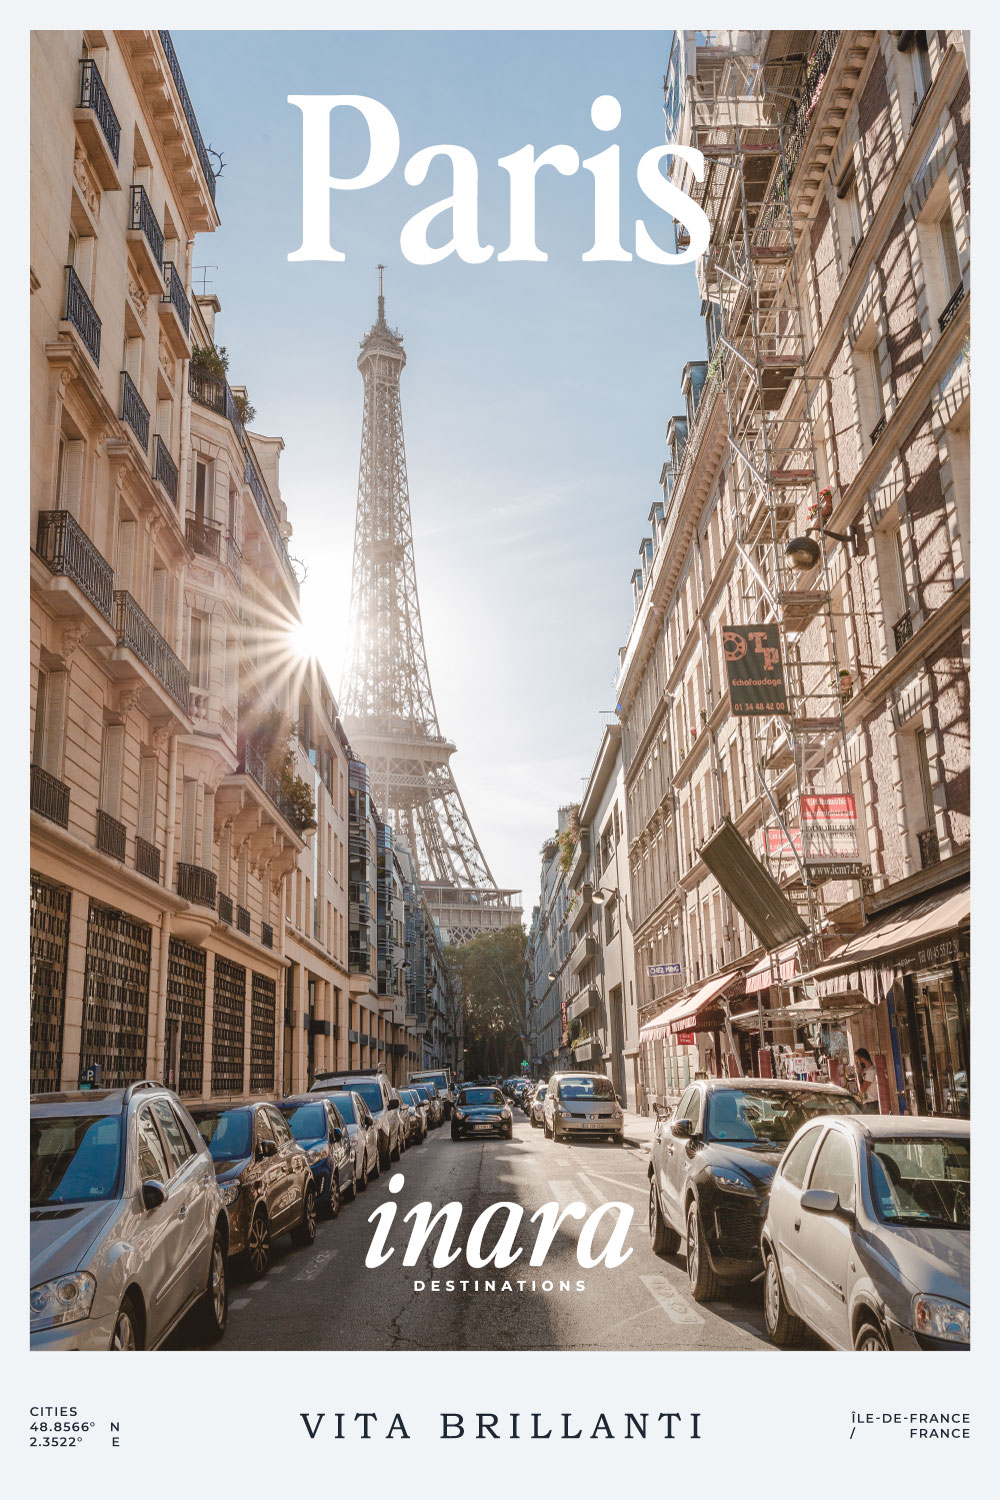 Paris destination cover